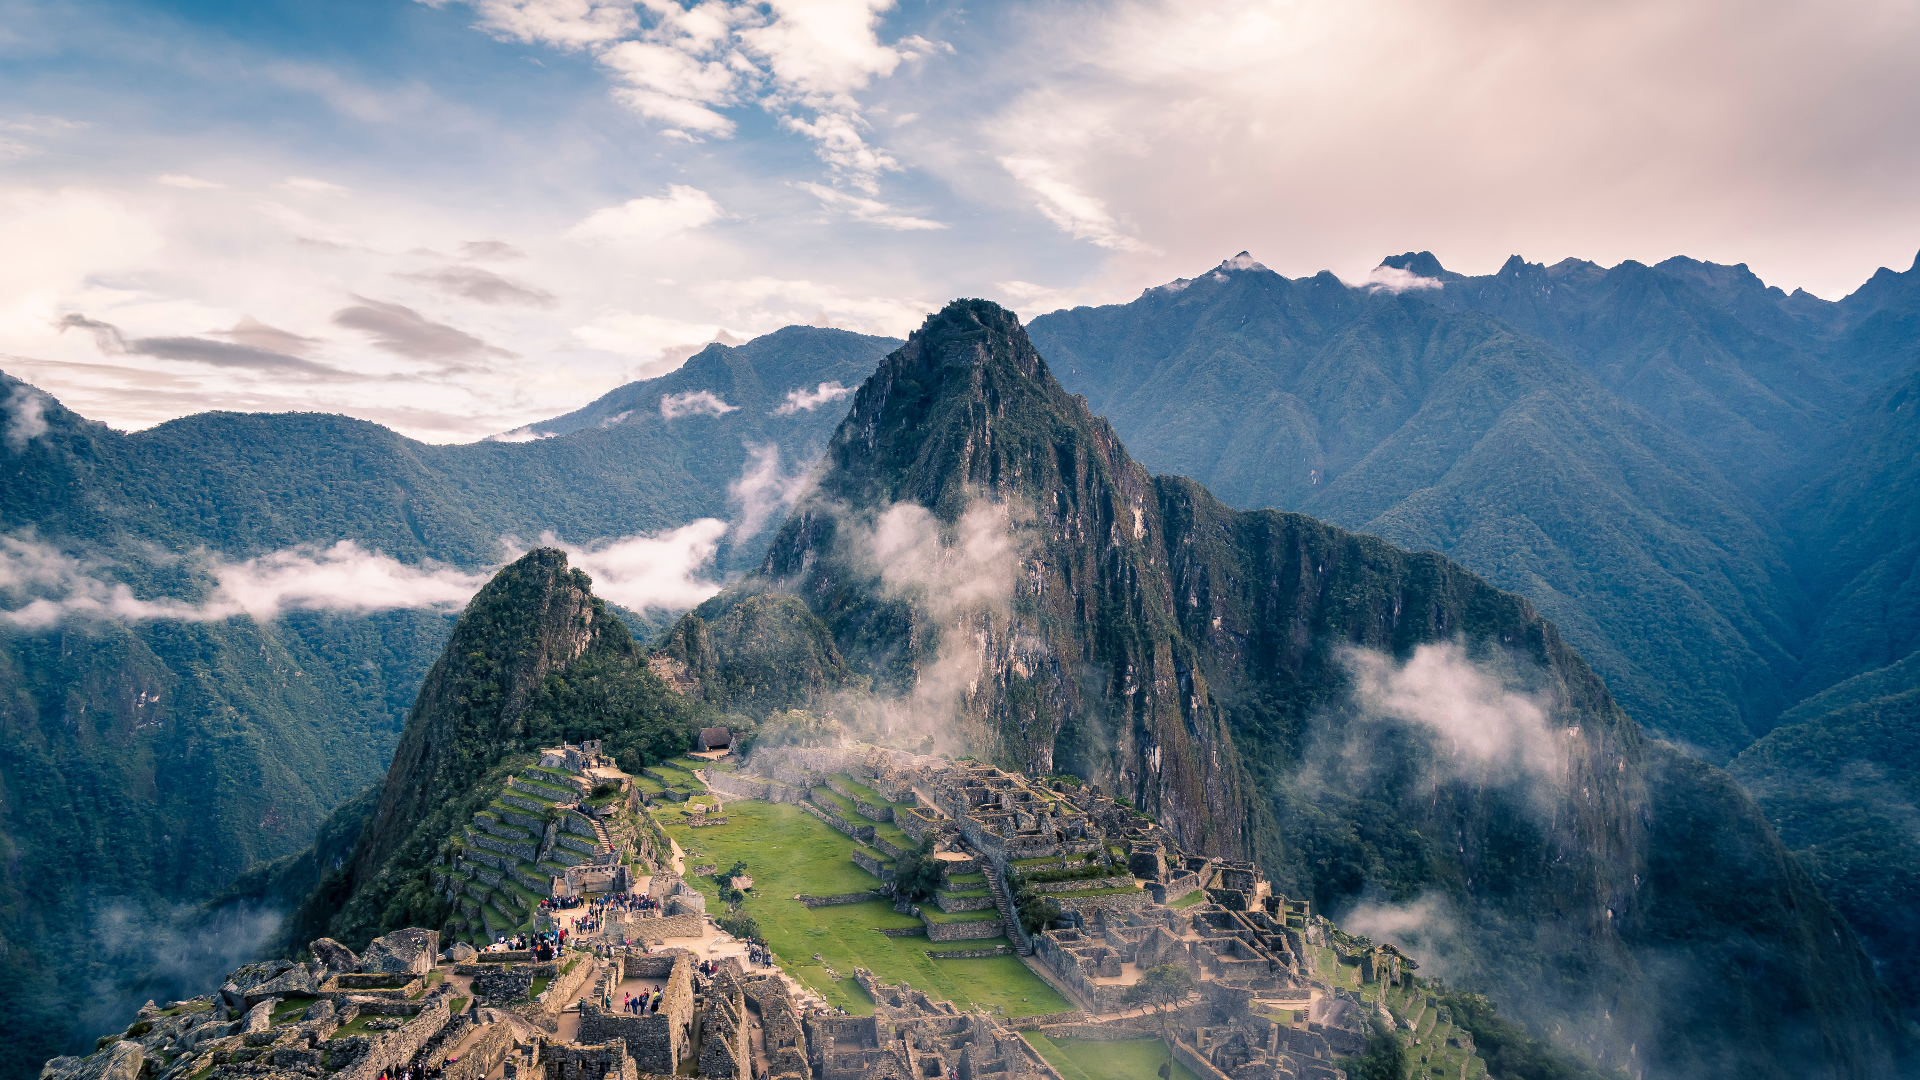 General 1920x1080 nature landscape clouds sky ancient mountains Machu Picchu Peru aerial view World Heritage Site South America